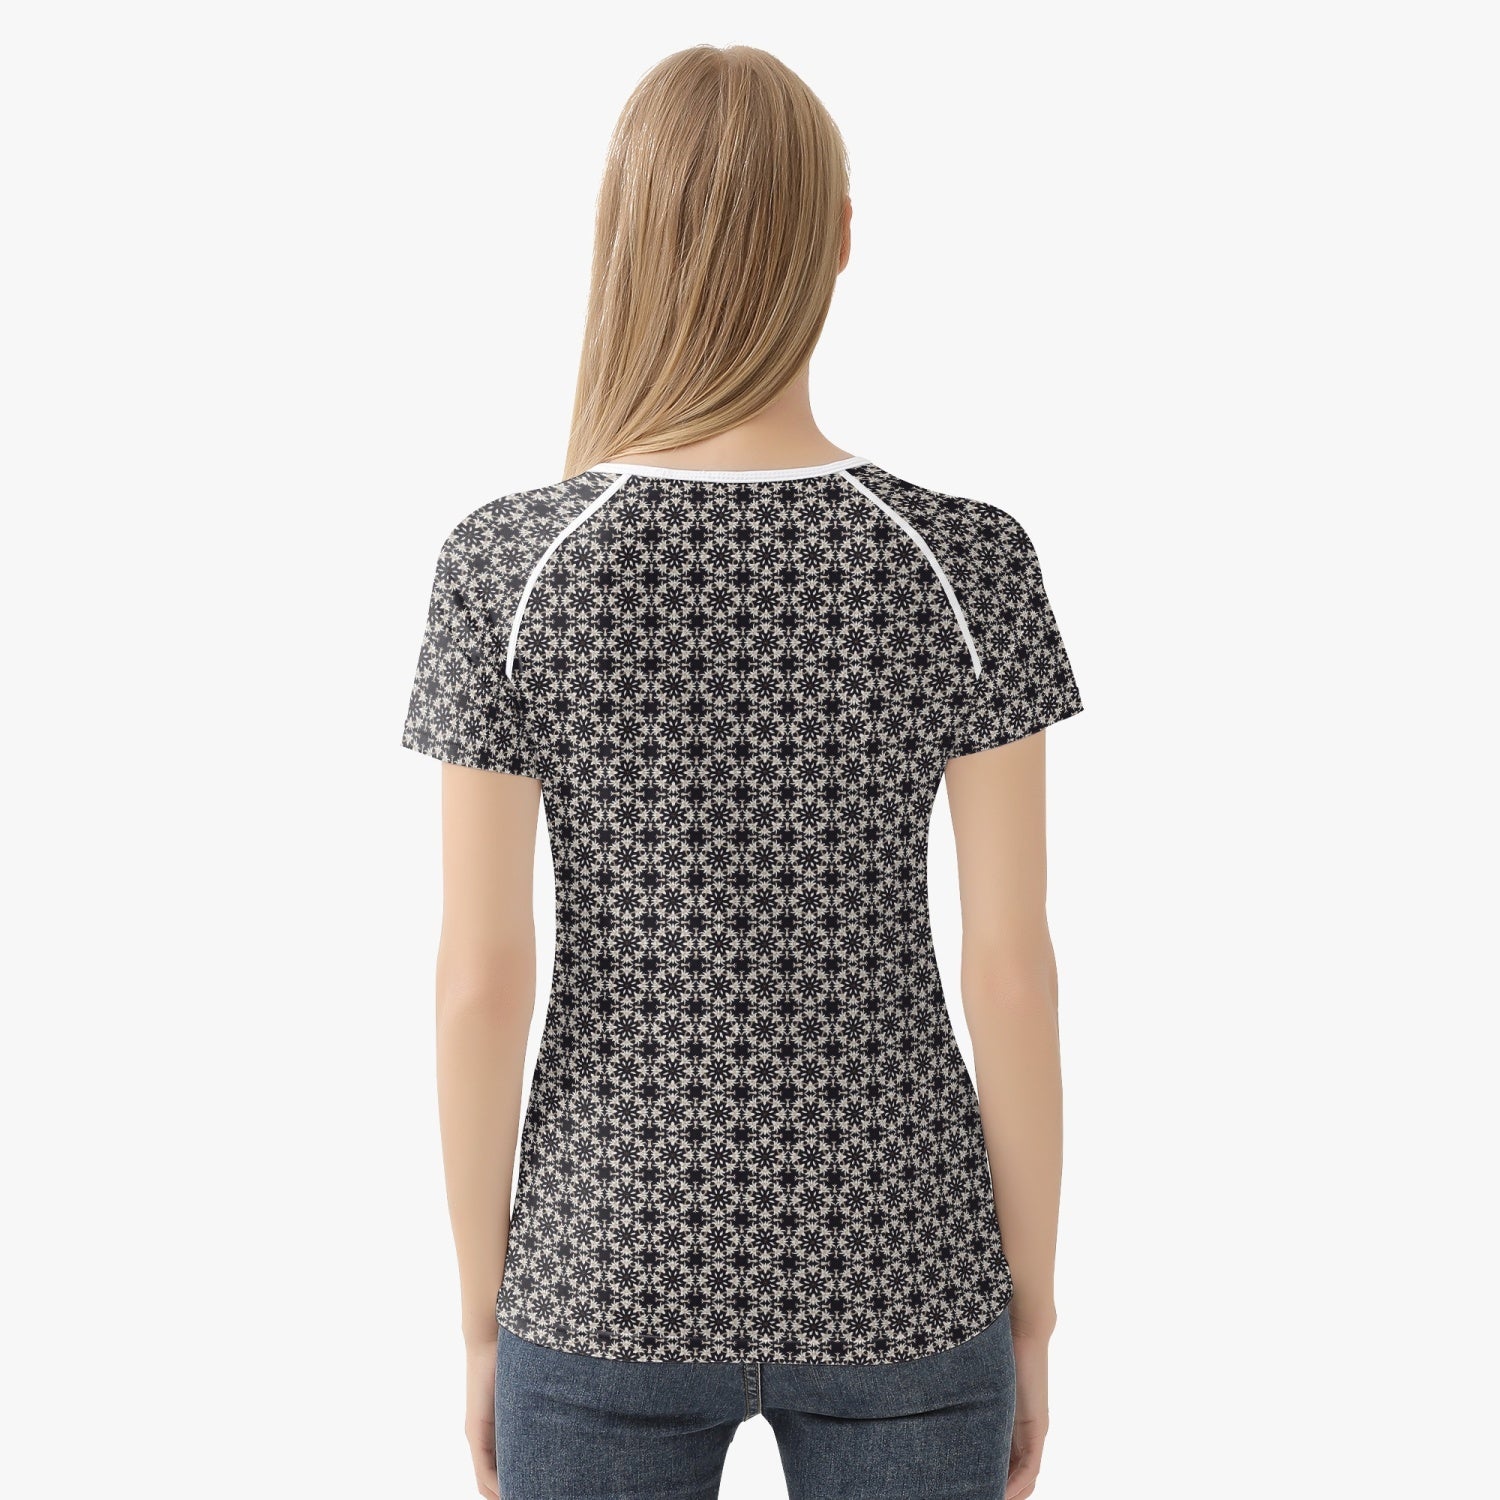 White lilie on Black,Handmade  Women T-shirt, Yoga top, by Sensus Studio Design